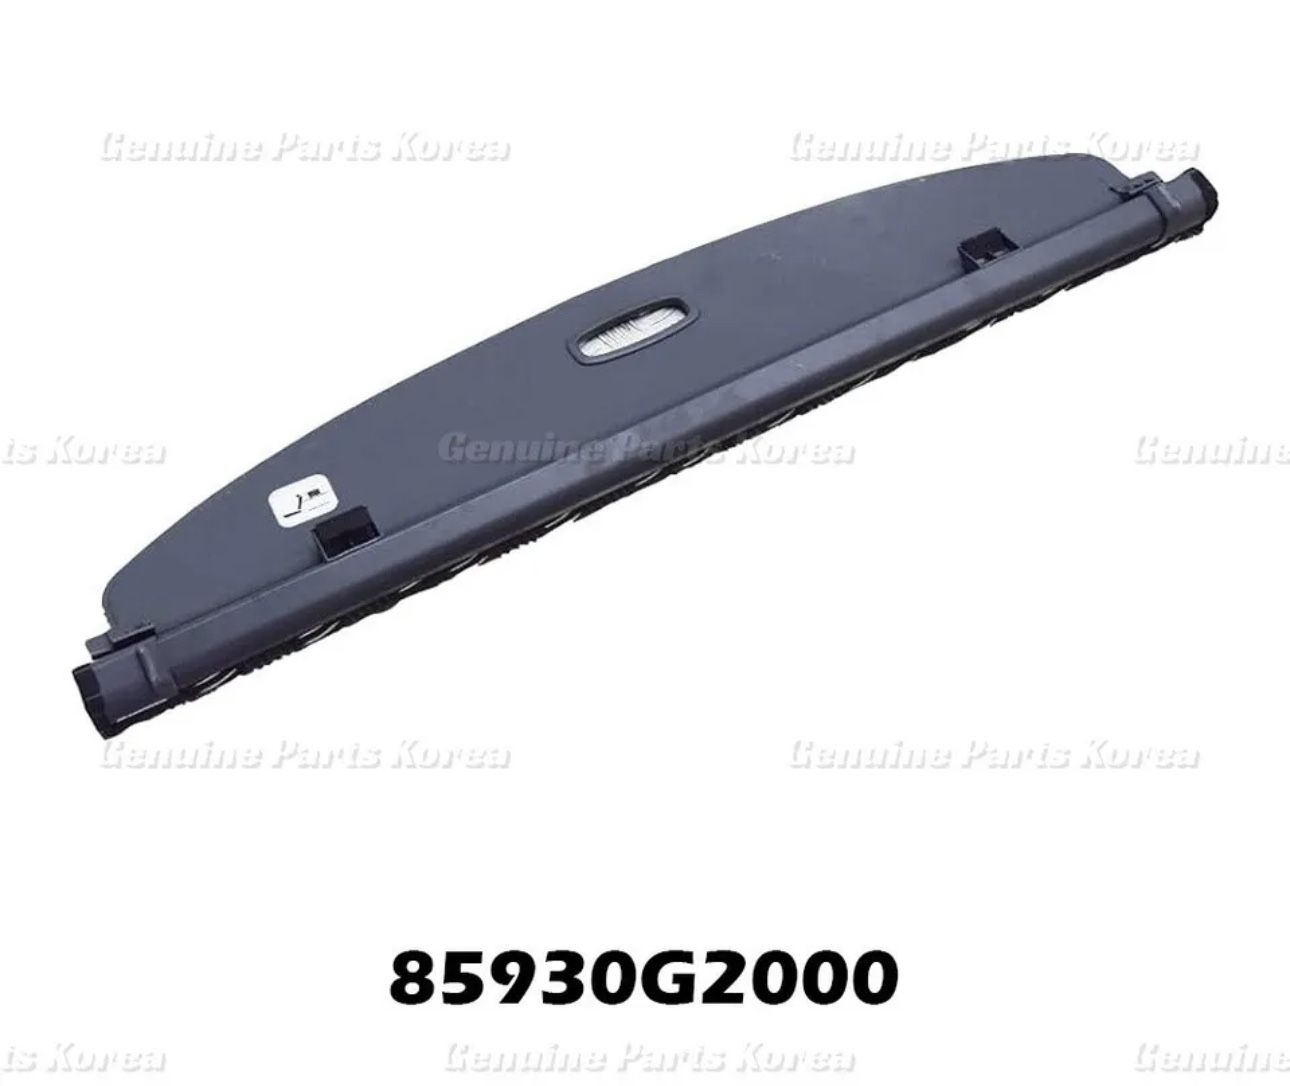 ⭐Genuine⭐ Parcel Shelf Load Cover 85930G2000 for Hyundai Ioniq